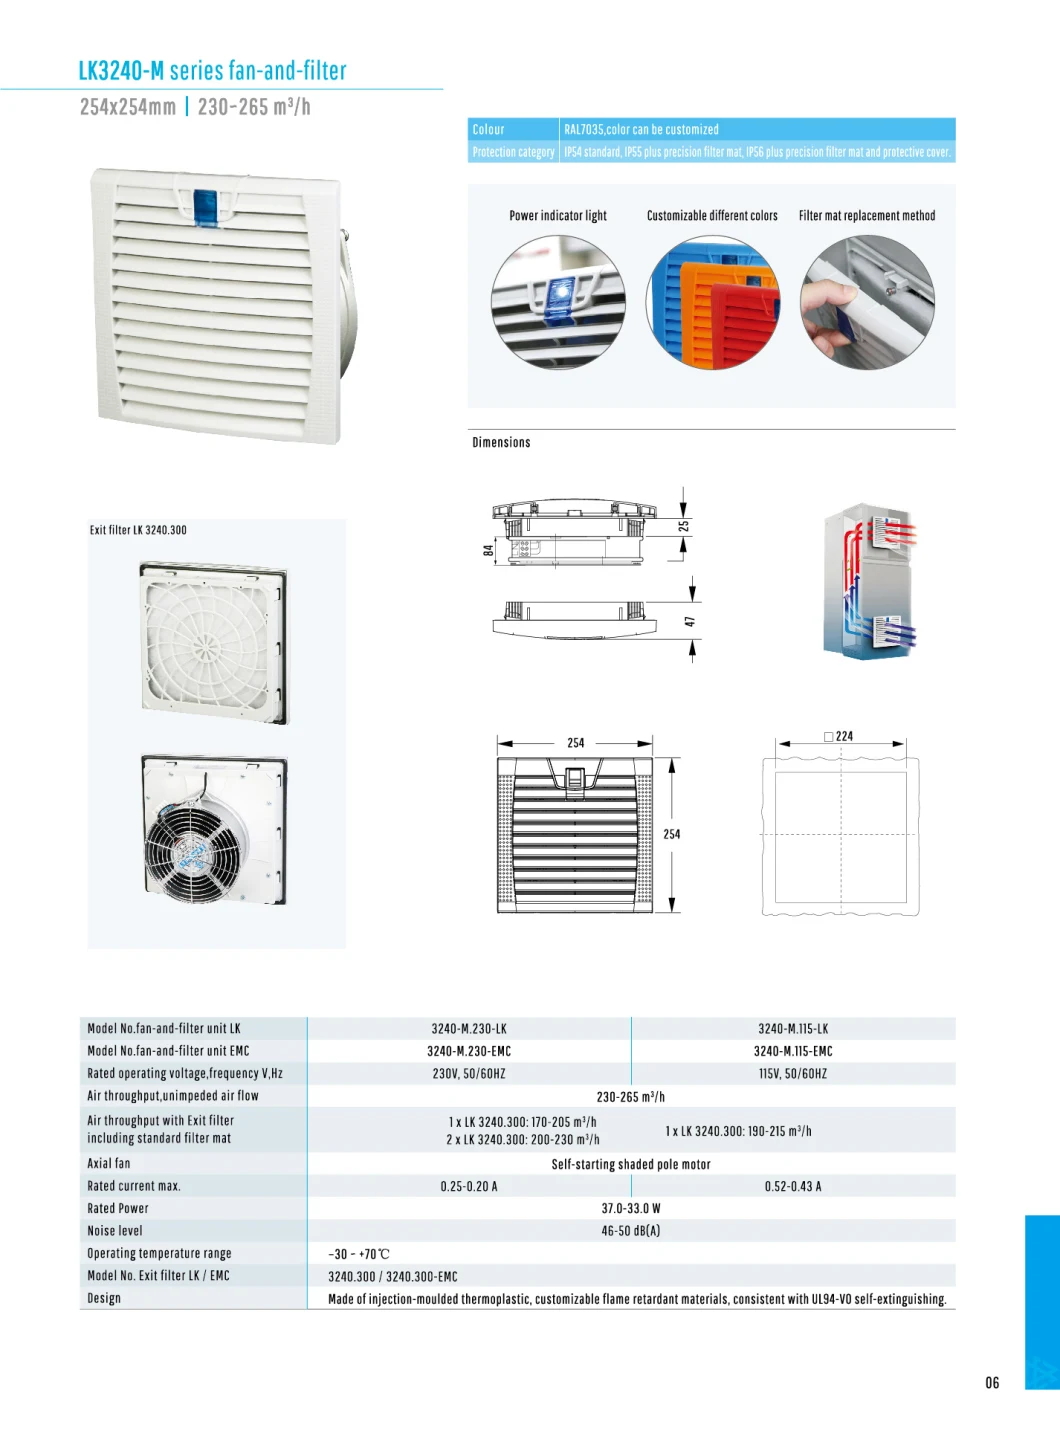 EMC Motor, Energy-Saving, High Quality HEPA Louver Filter with Fan Lk3240-M